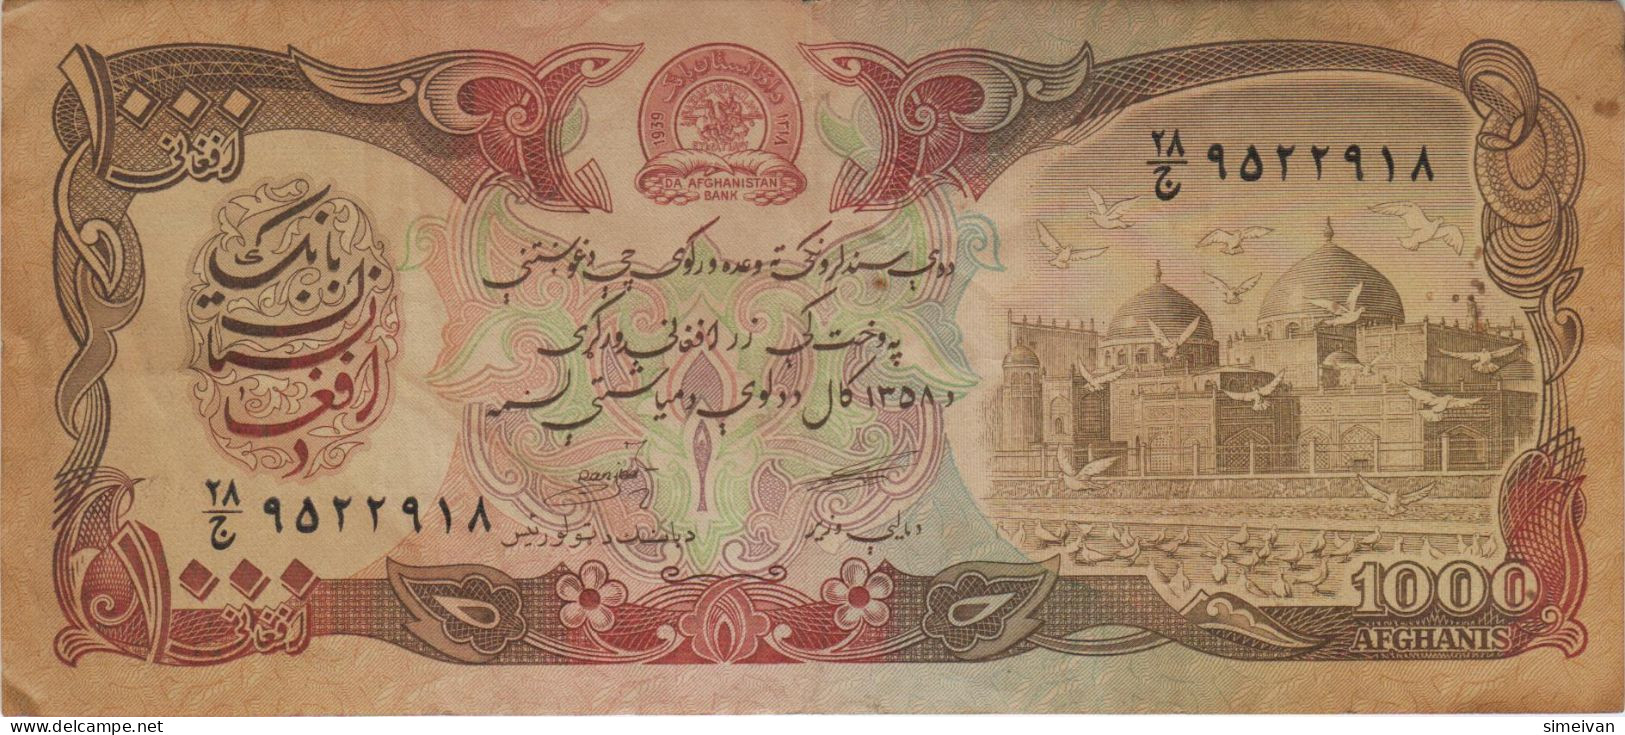 Afghanistan 1000 Afghanis SH1358 (1979) P-61а Banknote Middle East Currency  #5125 - Afghanistan